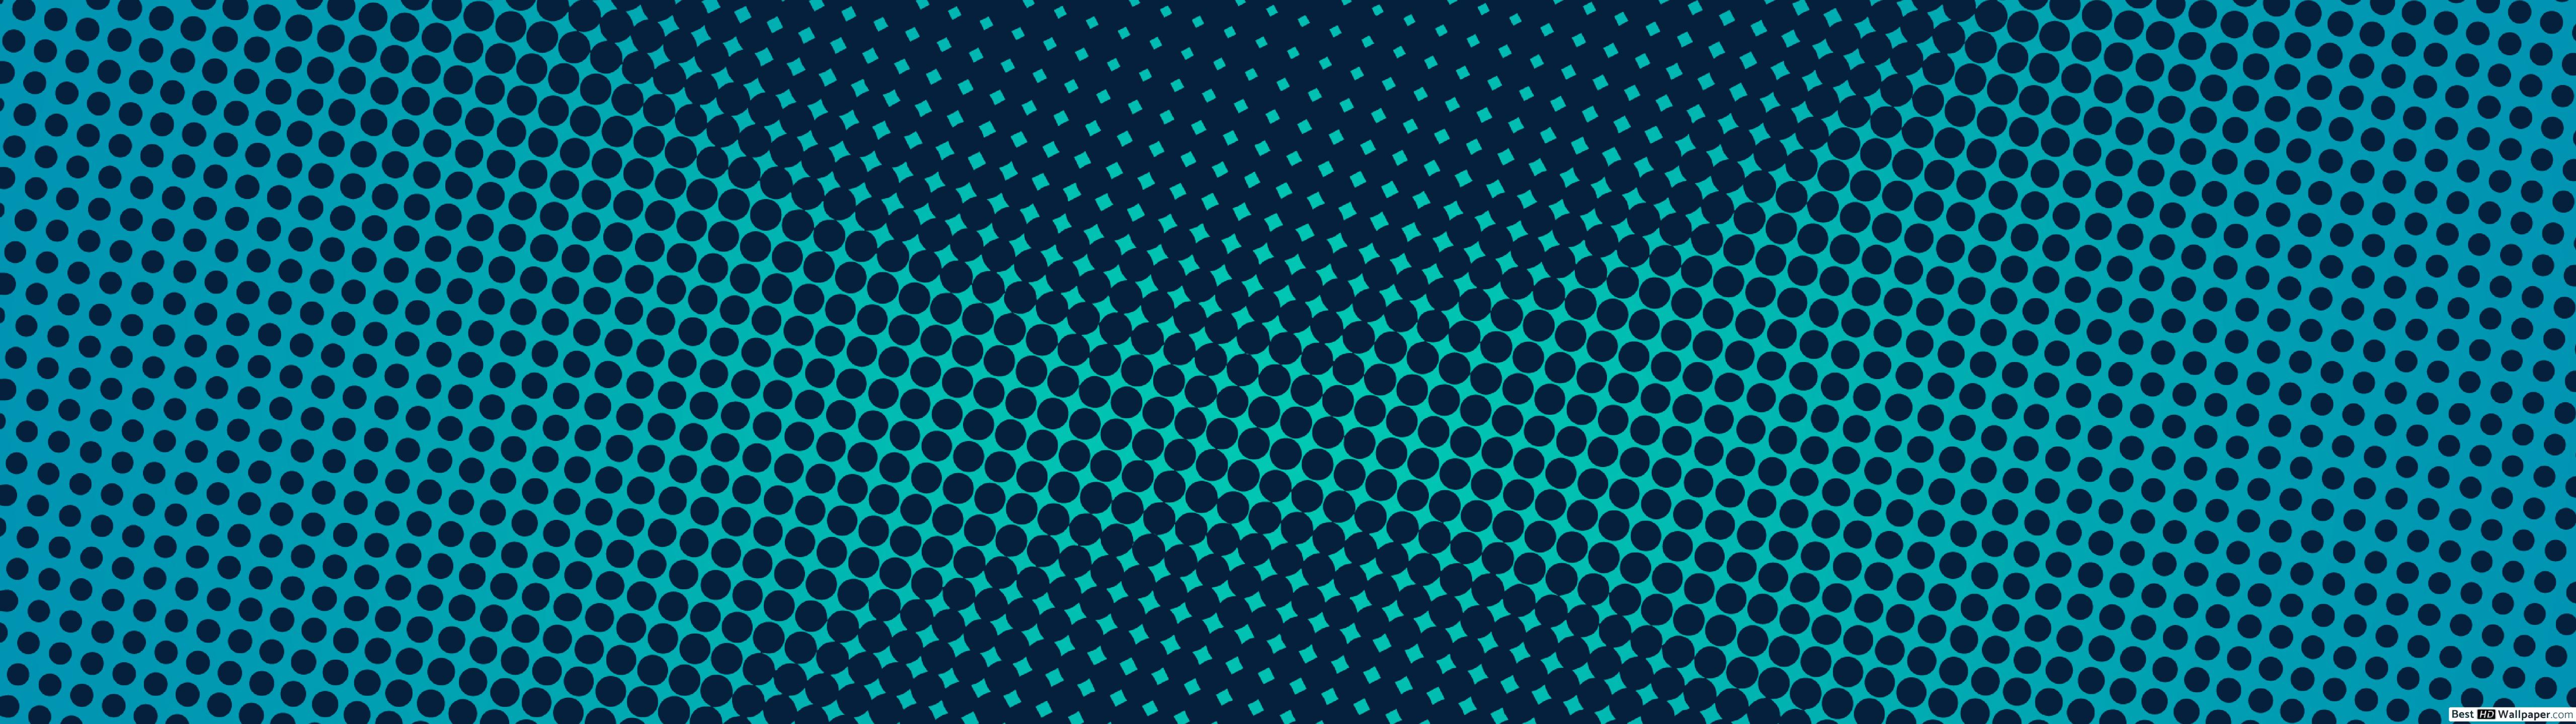 Turquoise circles pattern HD wallpaper download